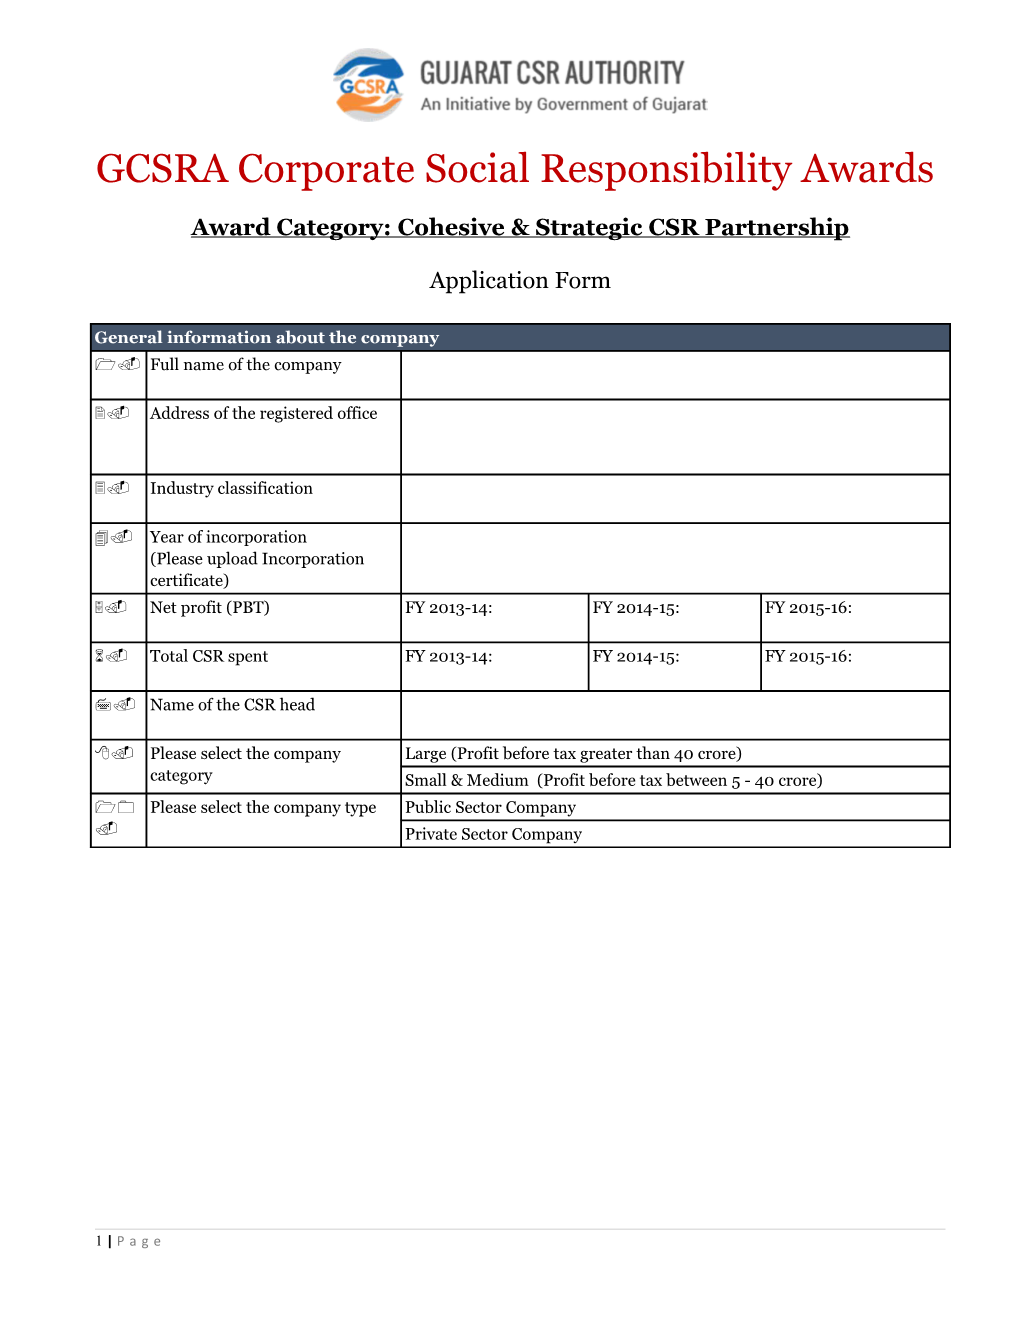 Award Category: Cohesive & Strategic CSR Partnership